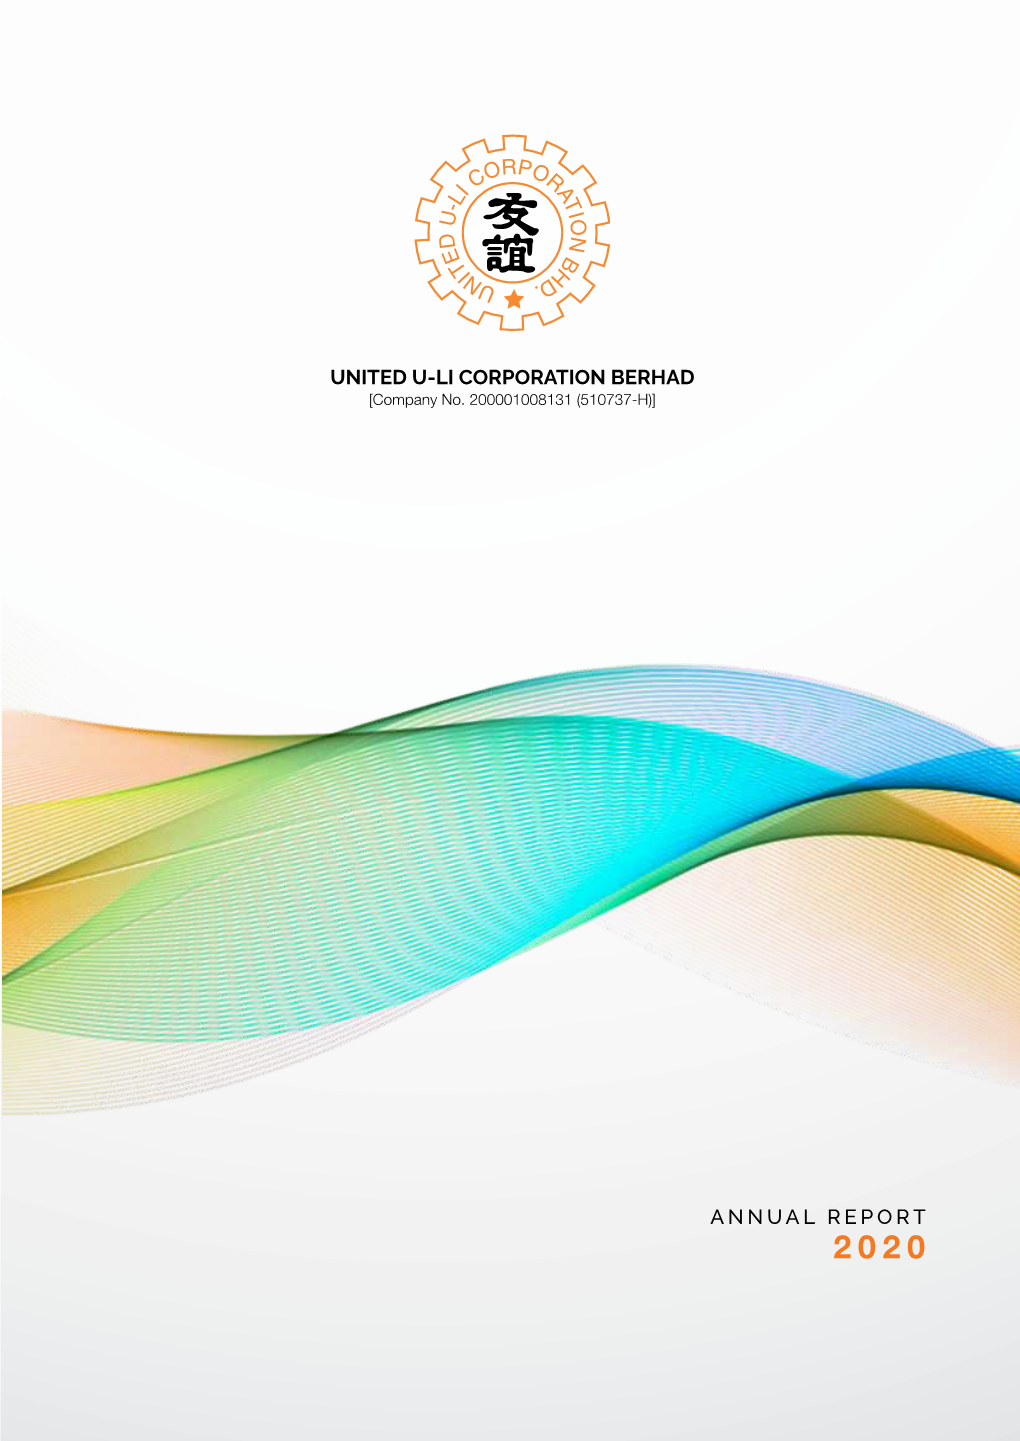 Annual Report UNITED U-LI CORPORATION BERHAD